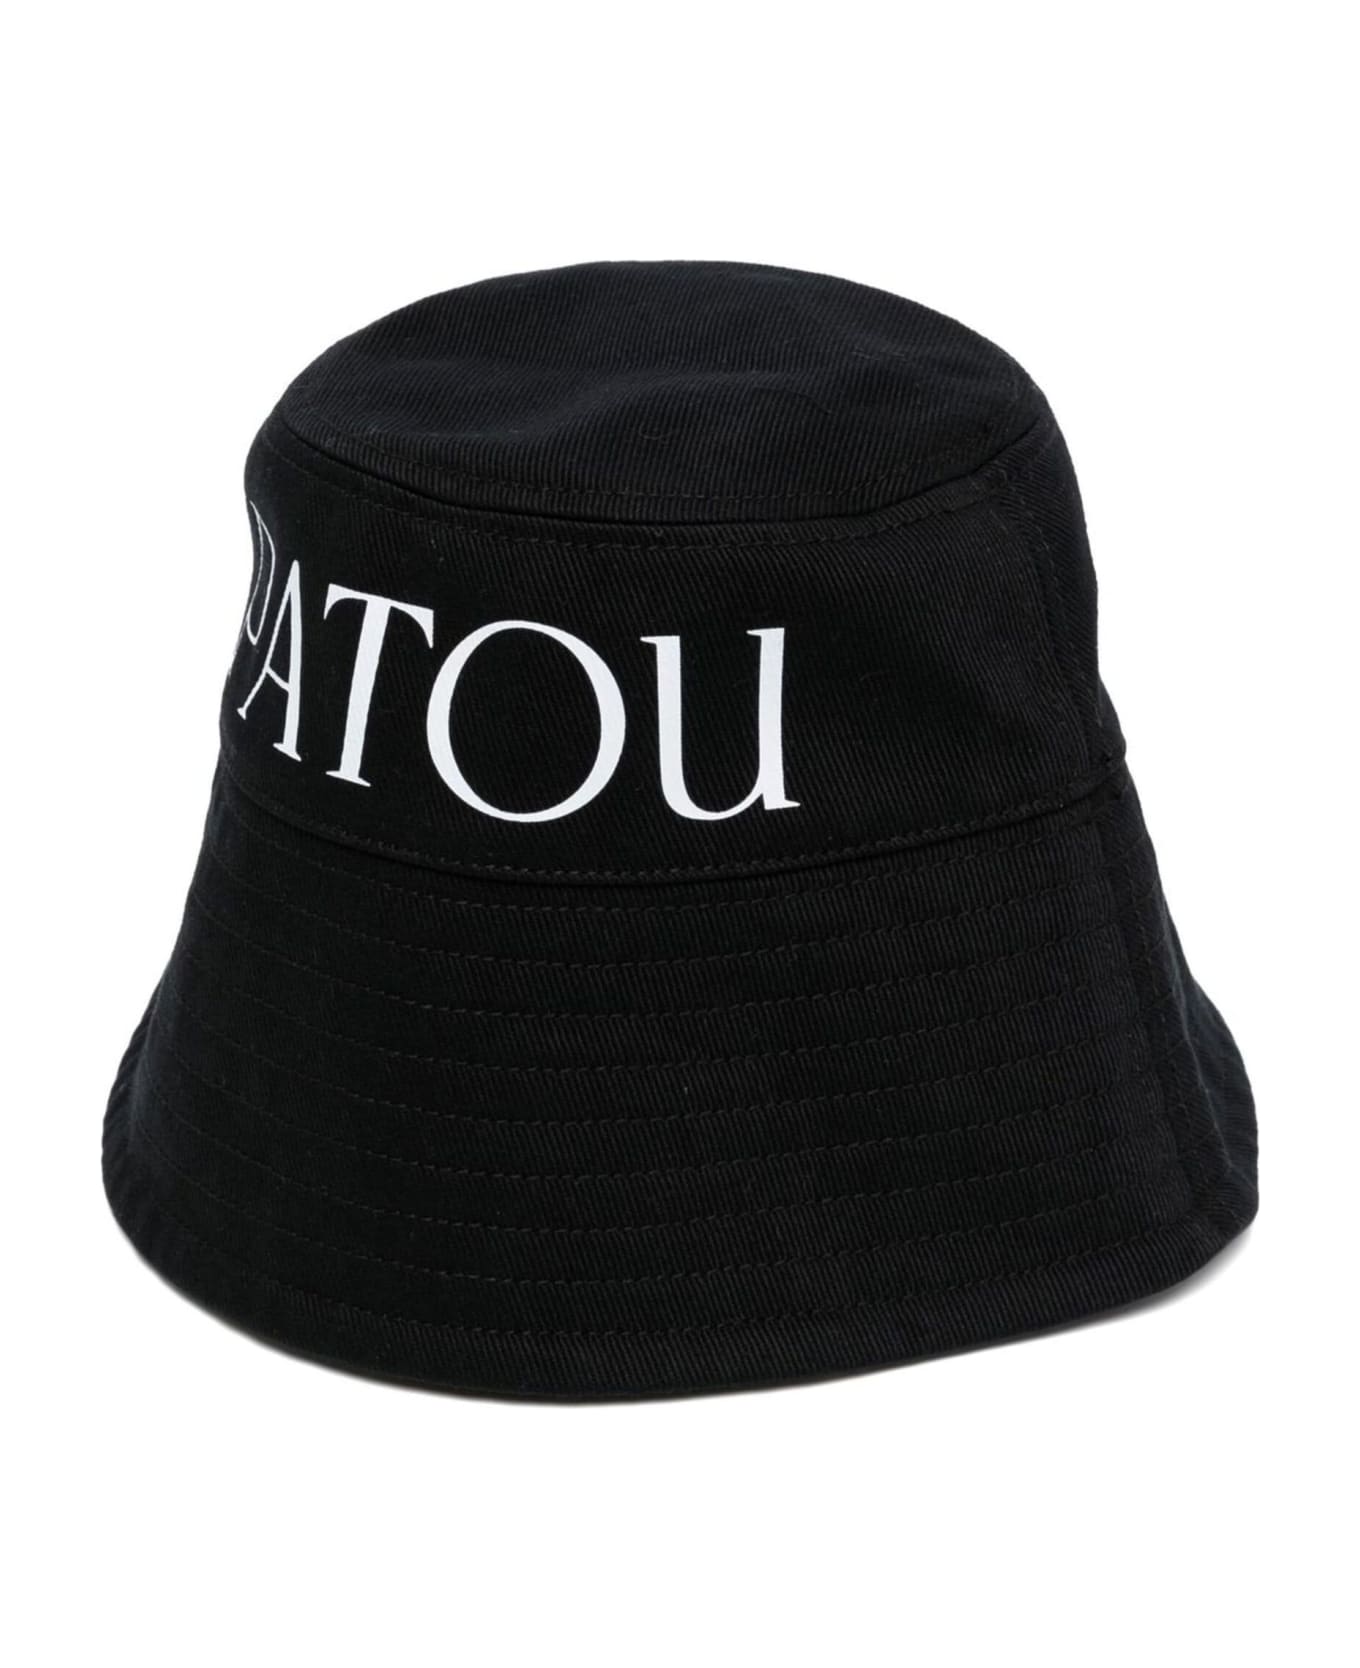 Patou Black Cotton Bucket Hat - Black